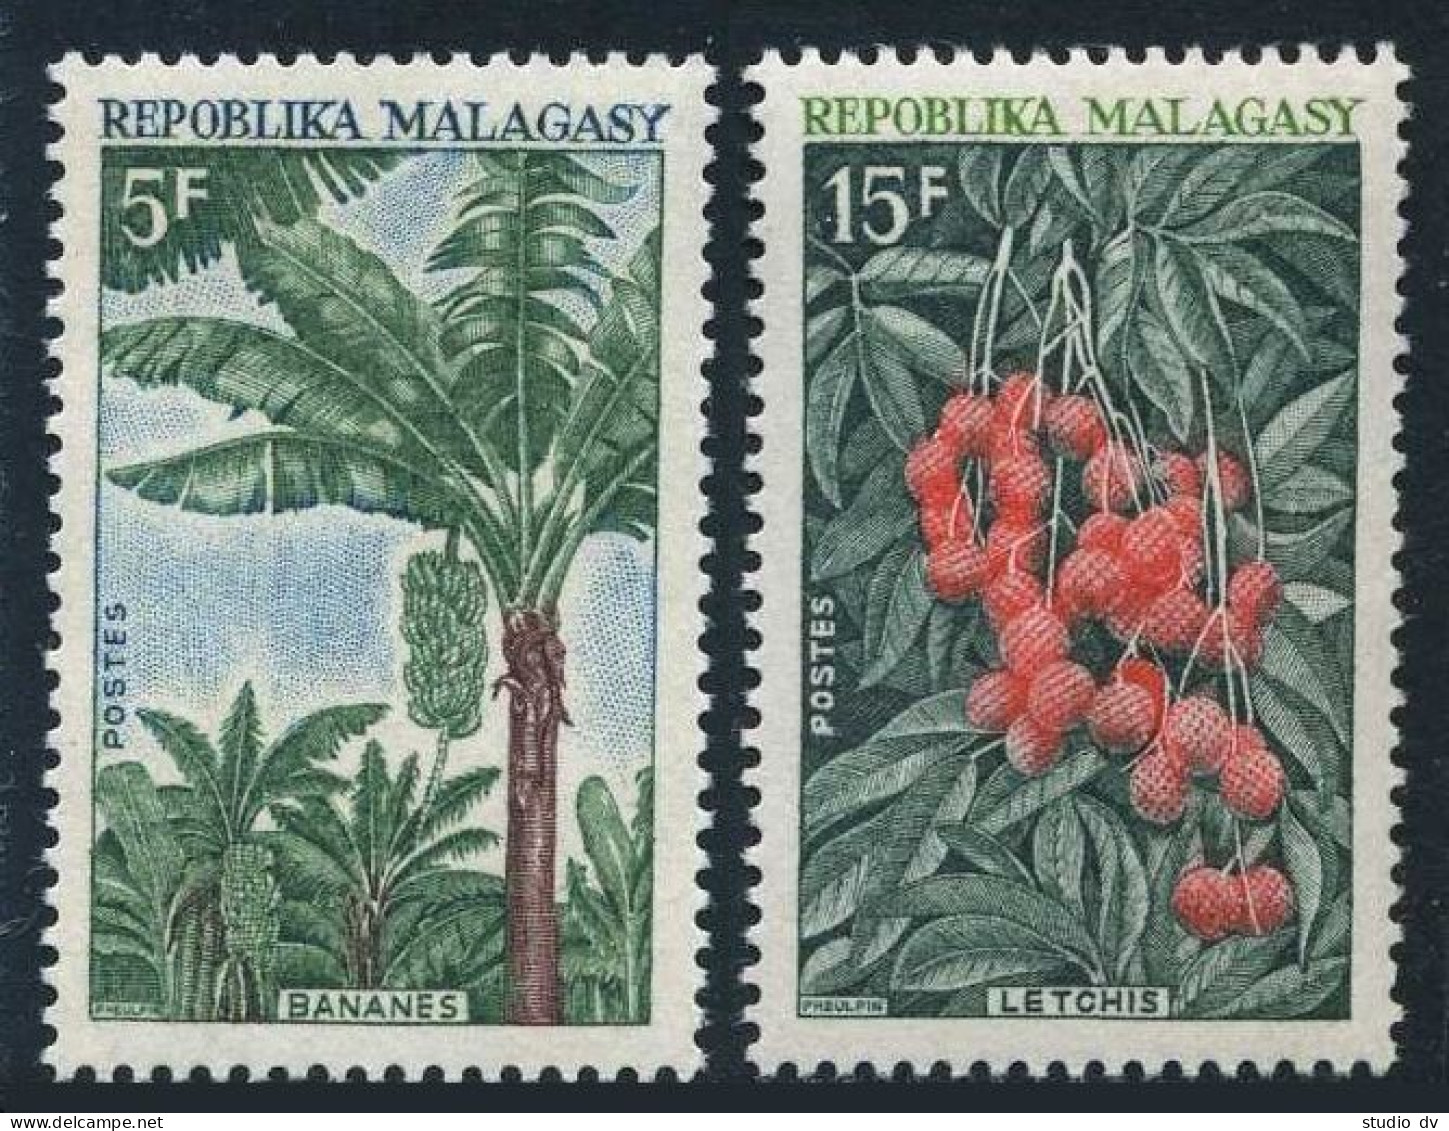 Malagasy 427-428, Hinged. Michel 603-604. Banana Plants, Lichi Tree, 1969. - Madagaskar (1960-...)